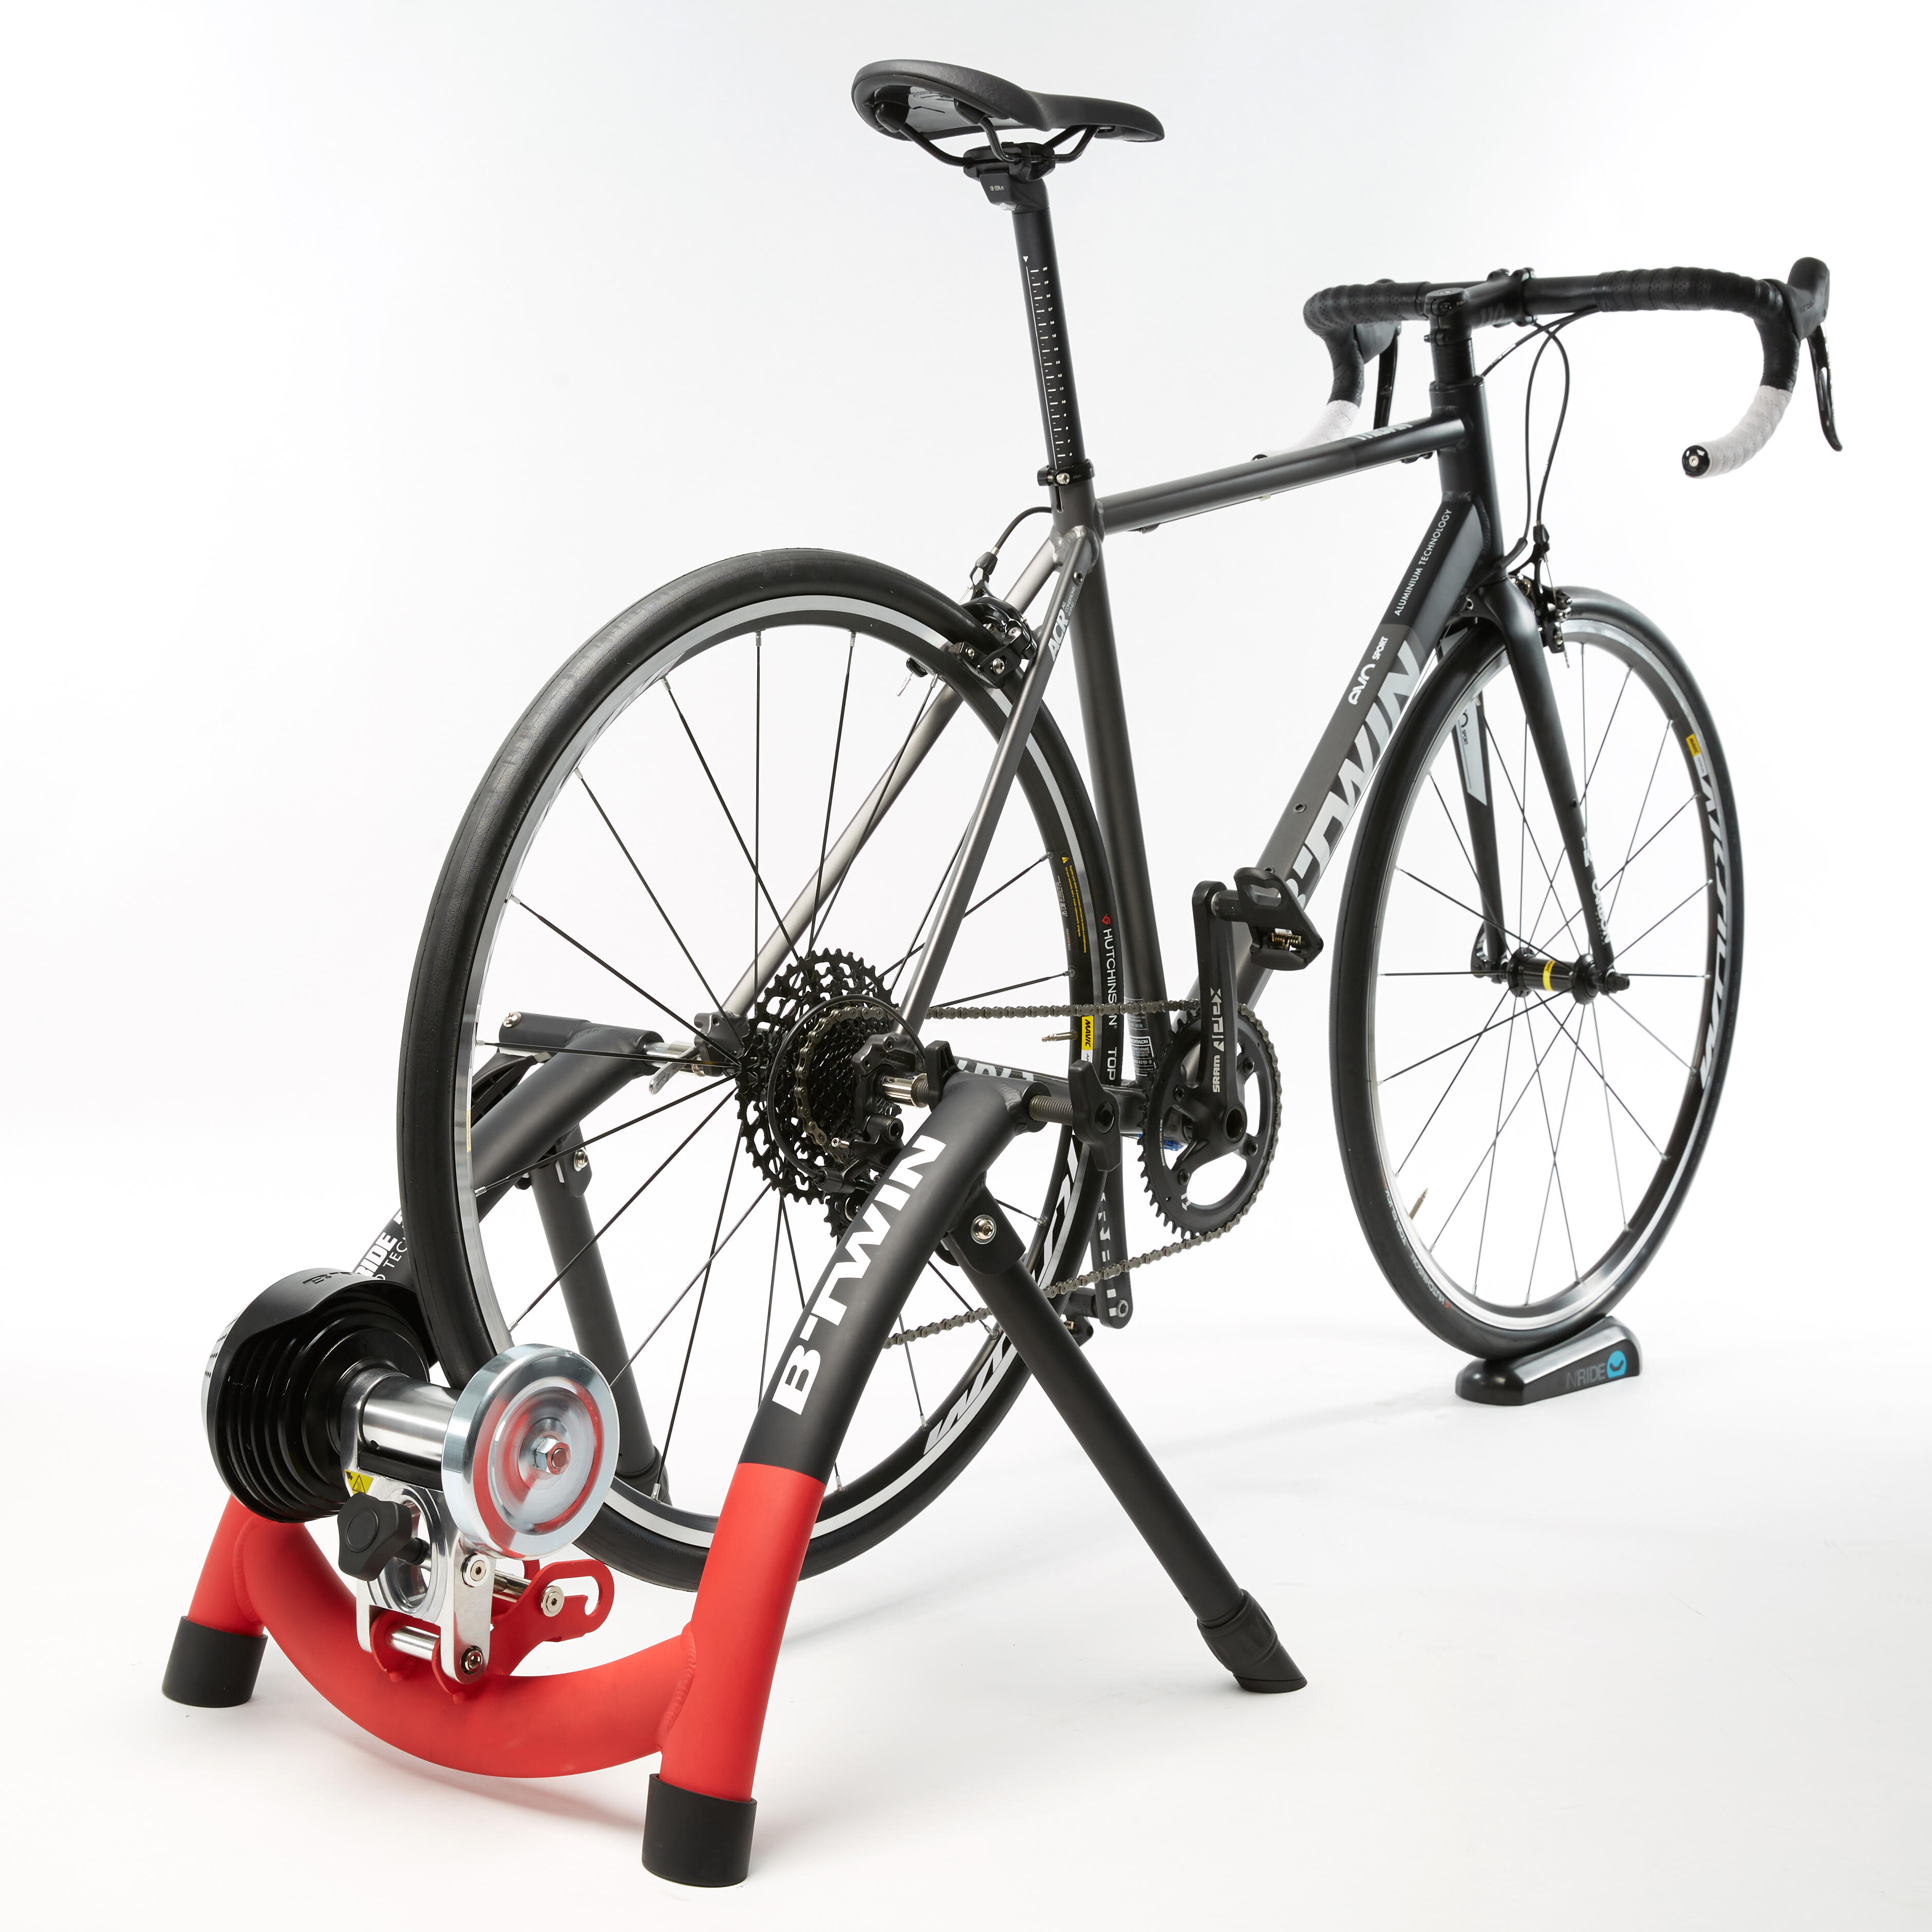 decathlon cycle trainer